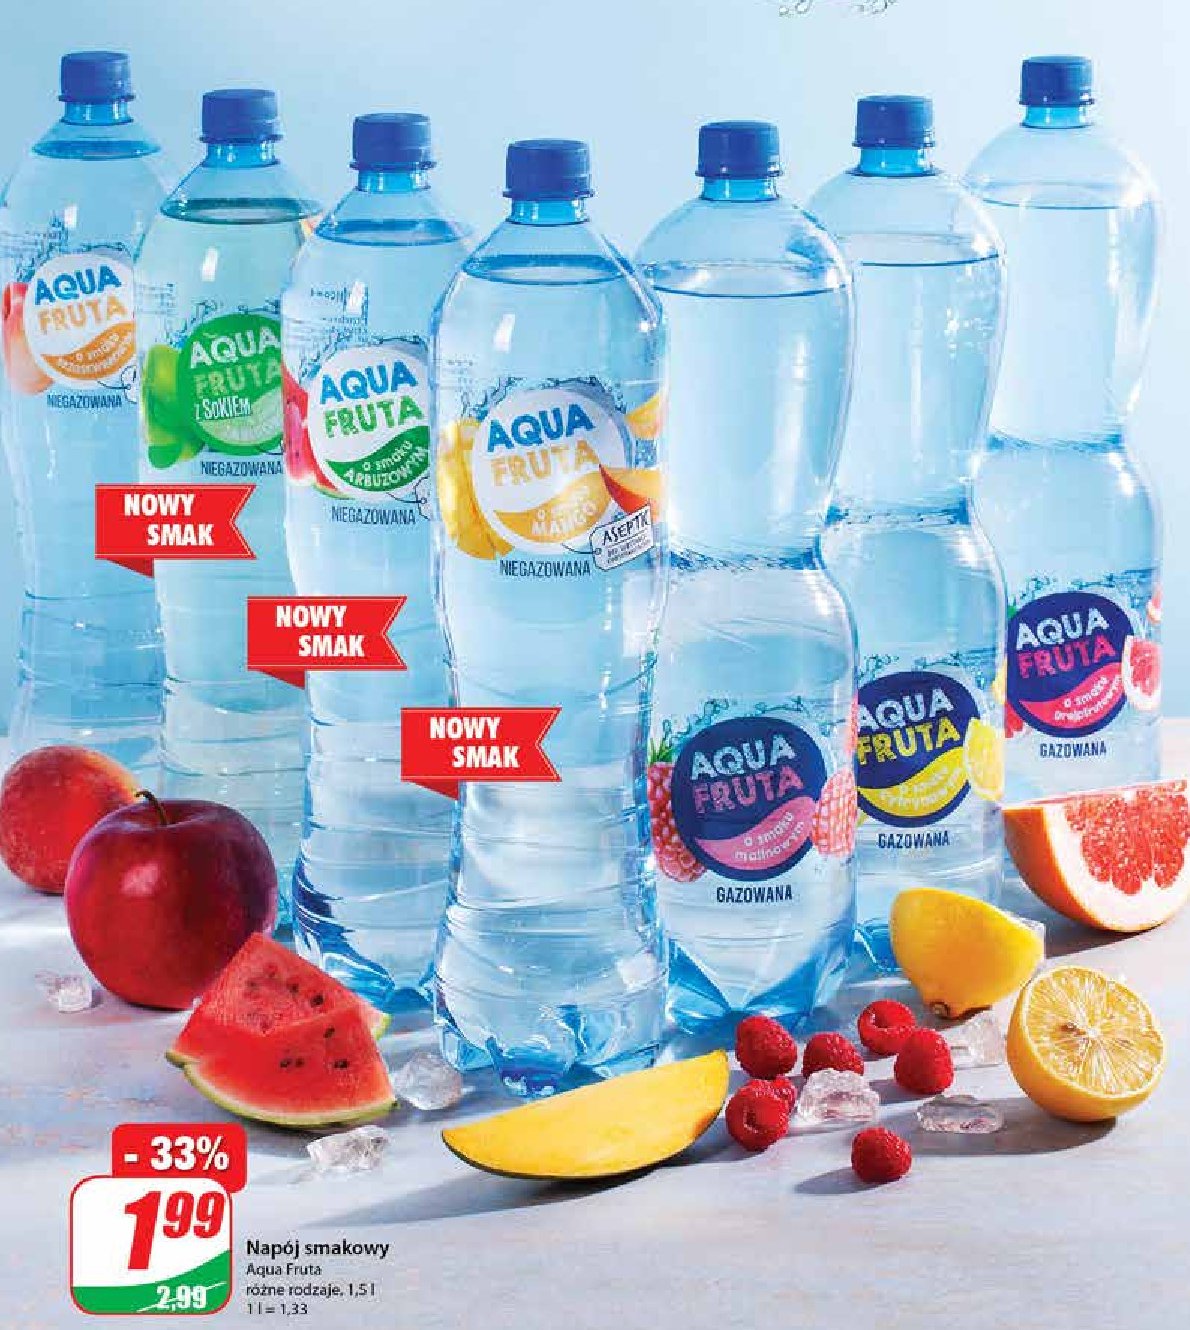 Woda arbuzowa Aqua fruta promocja